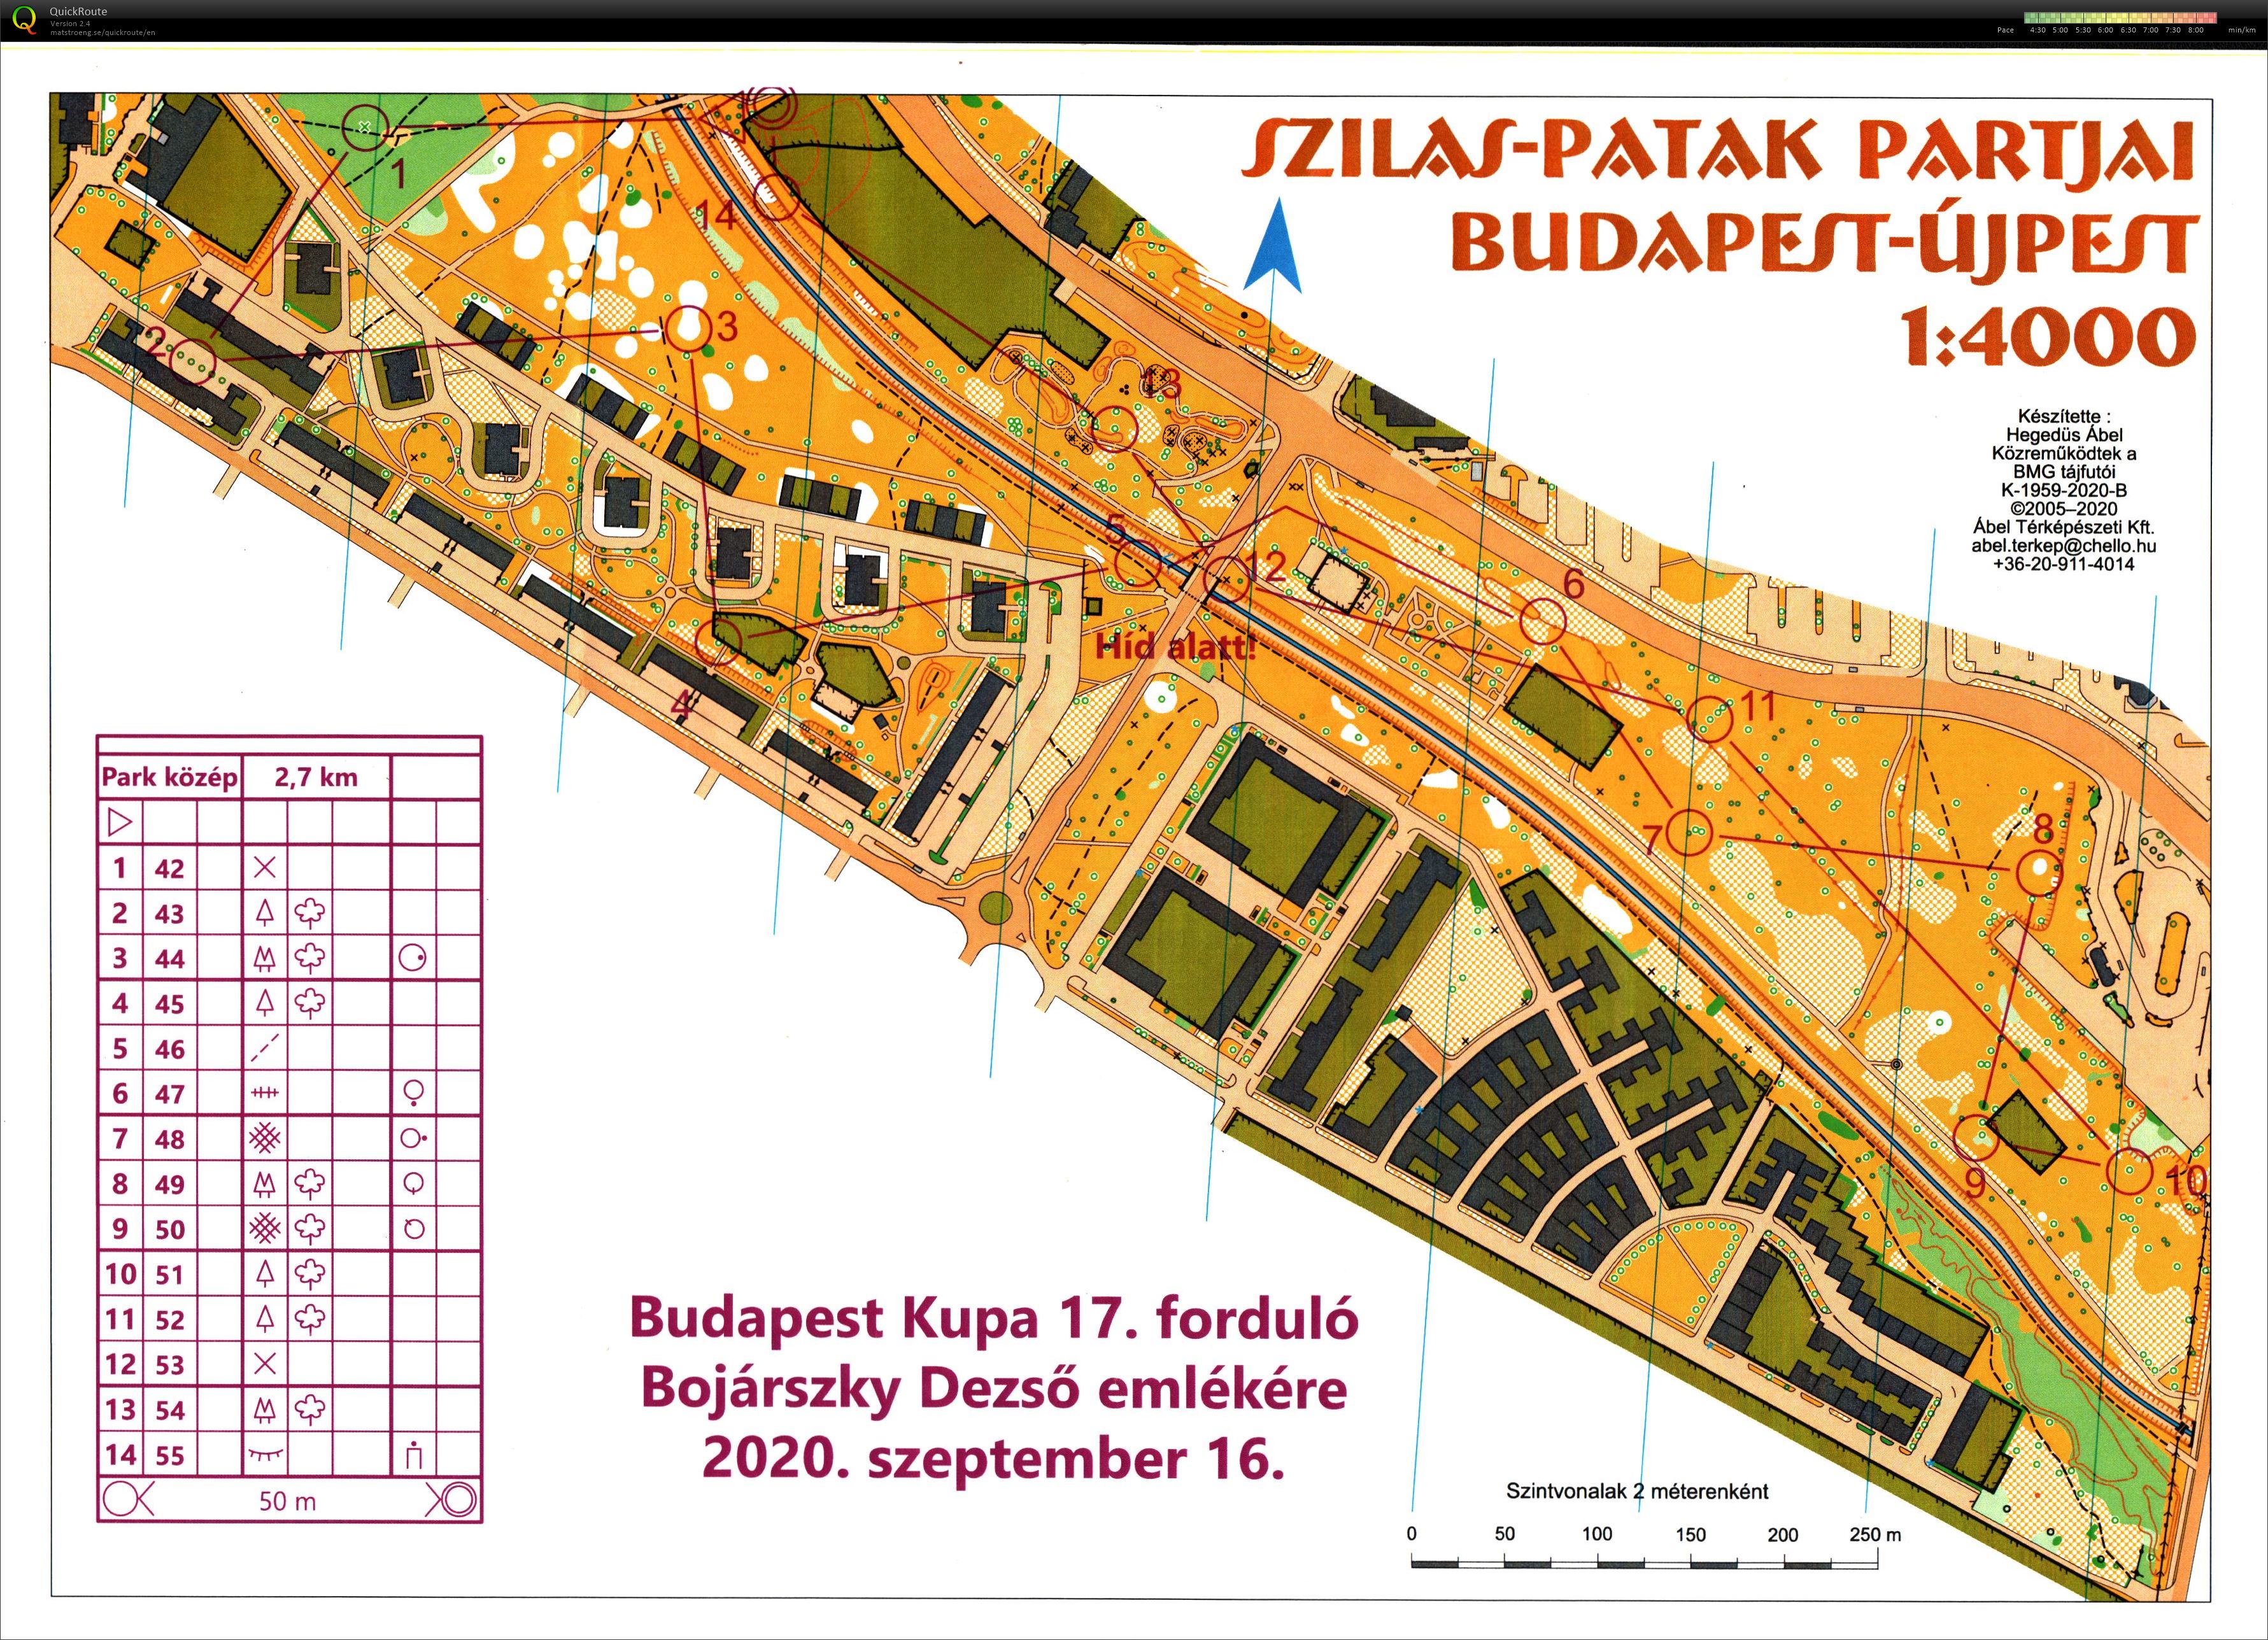 Budapest Kupa 17. forduló (16.09.2020)